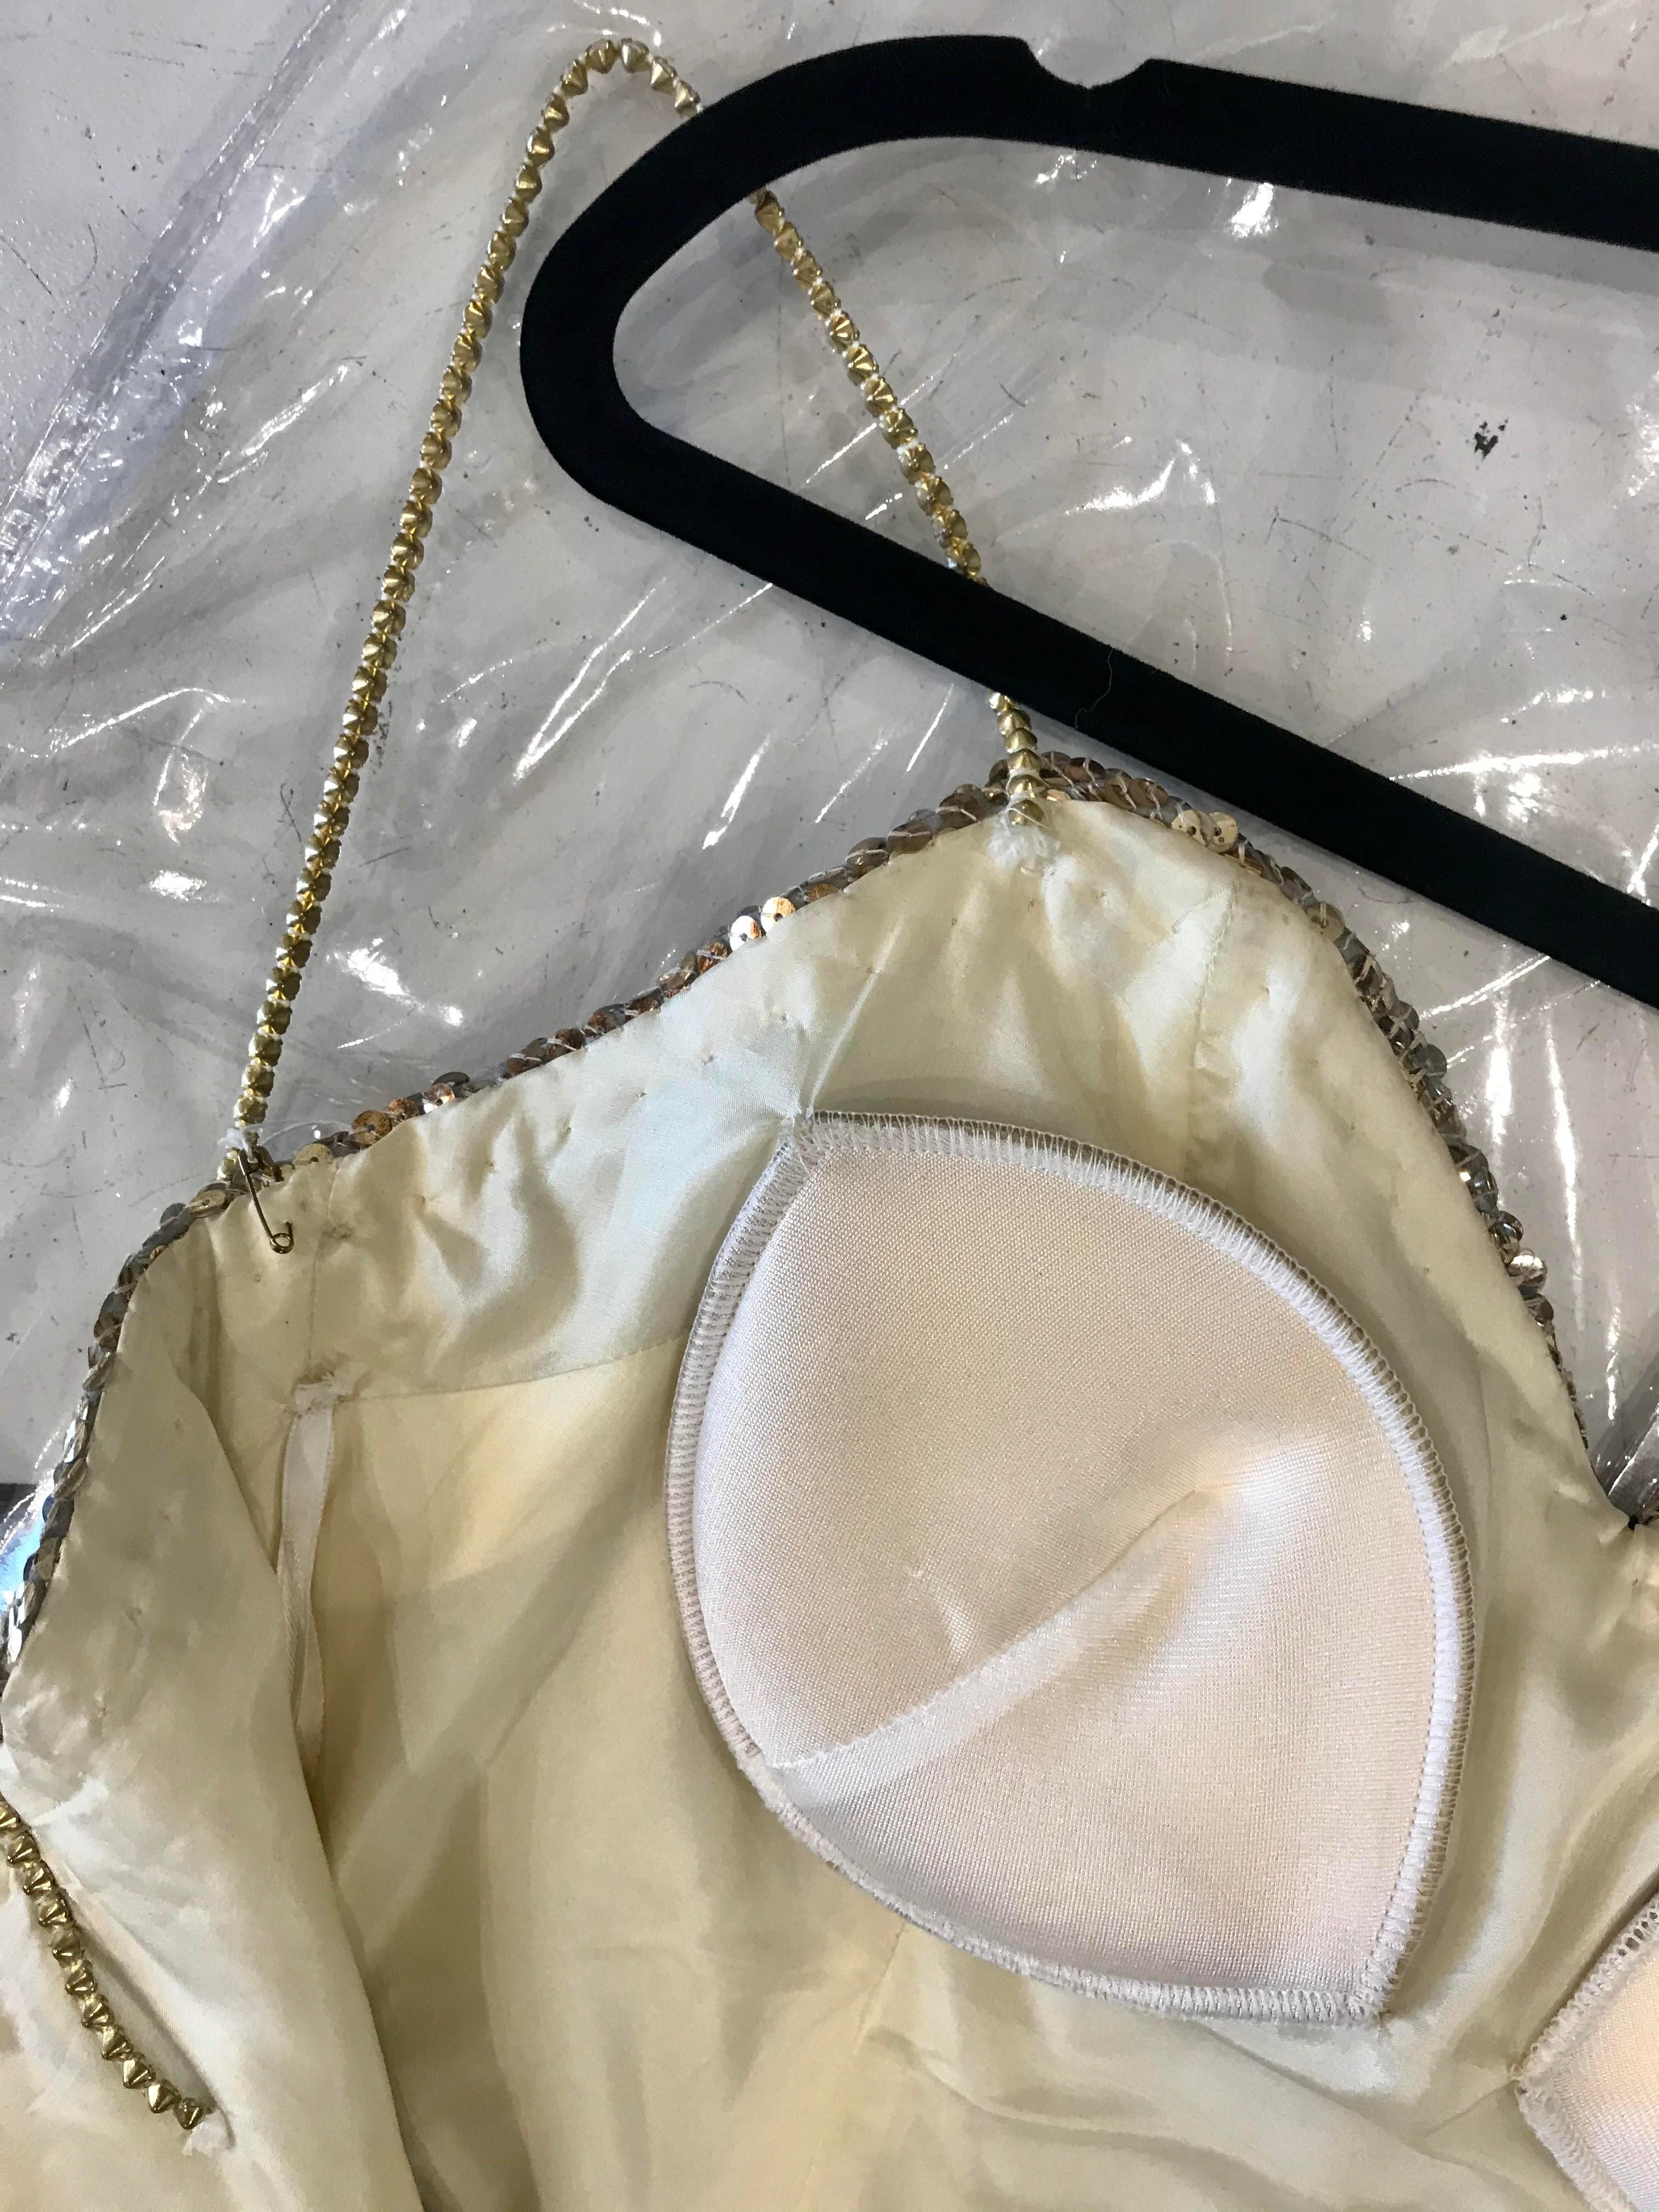 ELIZABETH MASON COUTURE Gold Sequin Gown, Rhinestone Applique & Straps Size 4 For Sale 4